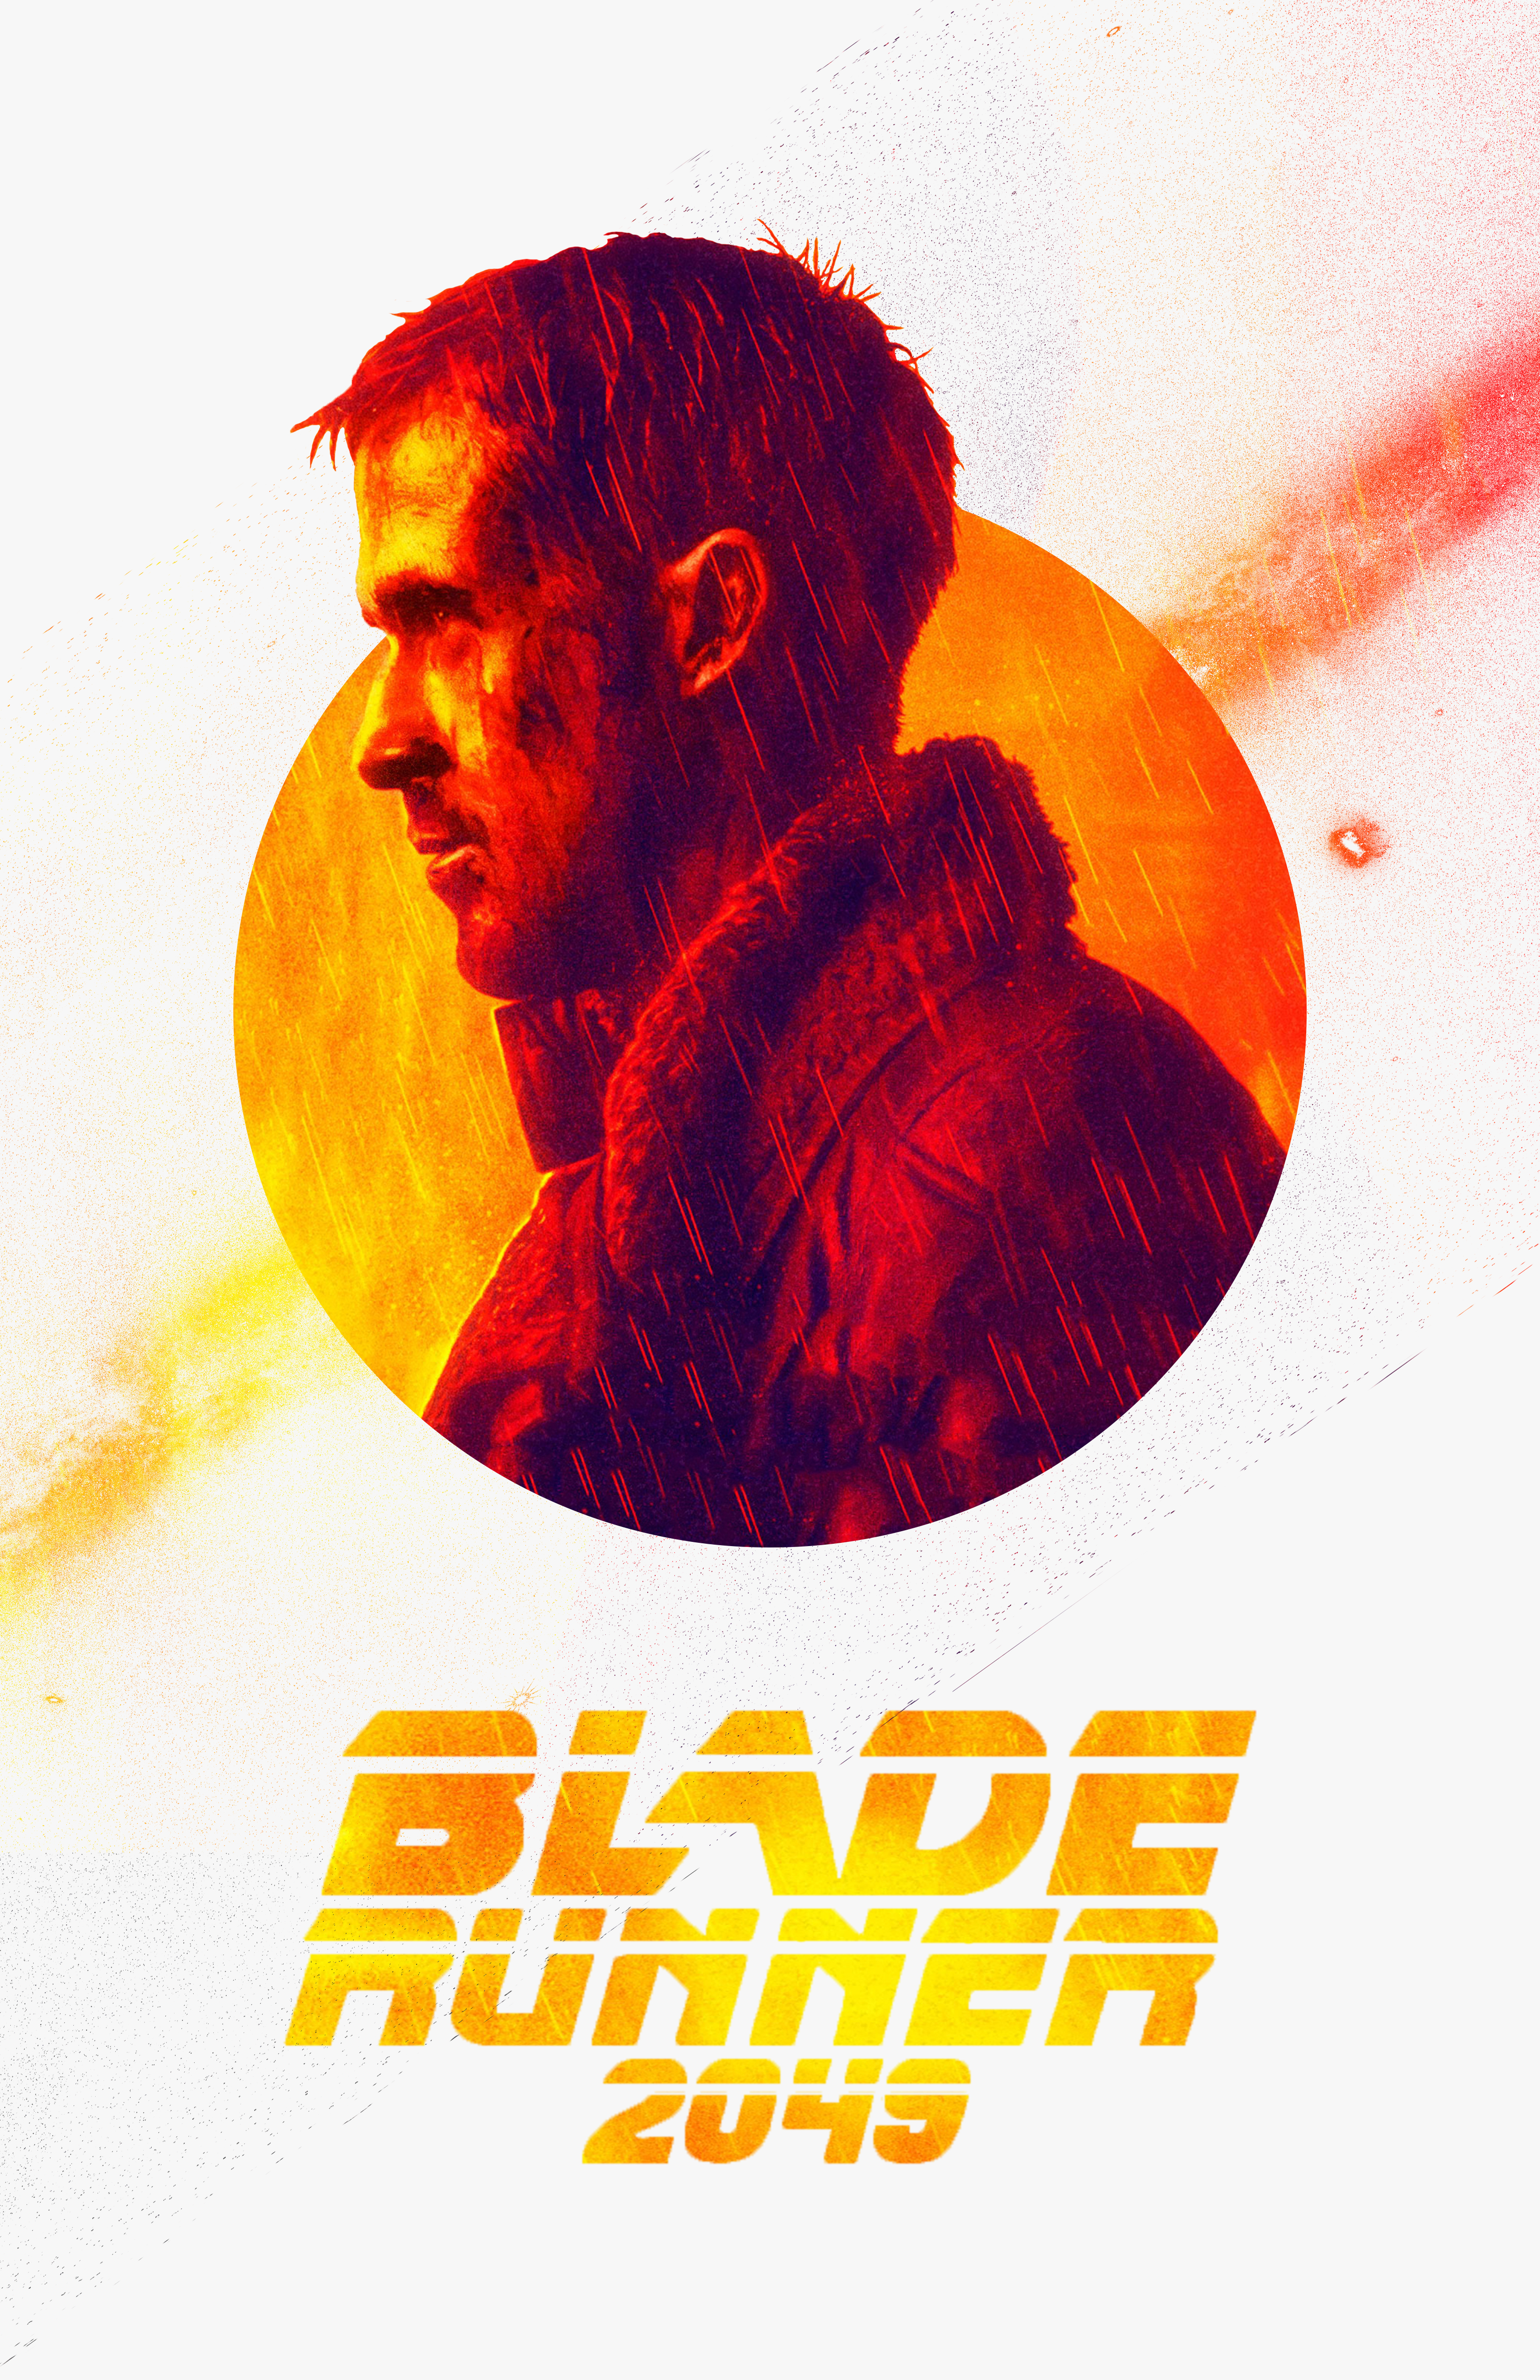 Movie Poster - Blade Runner by closerInternal on DeviantArt